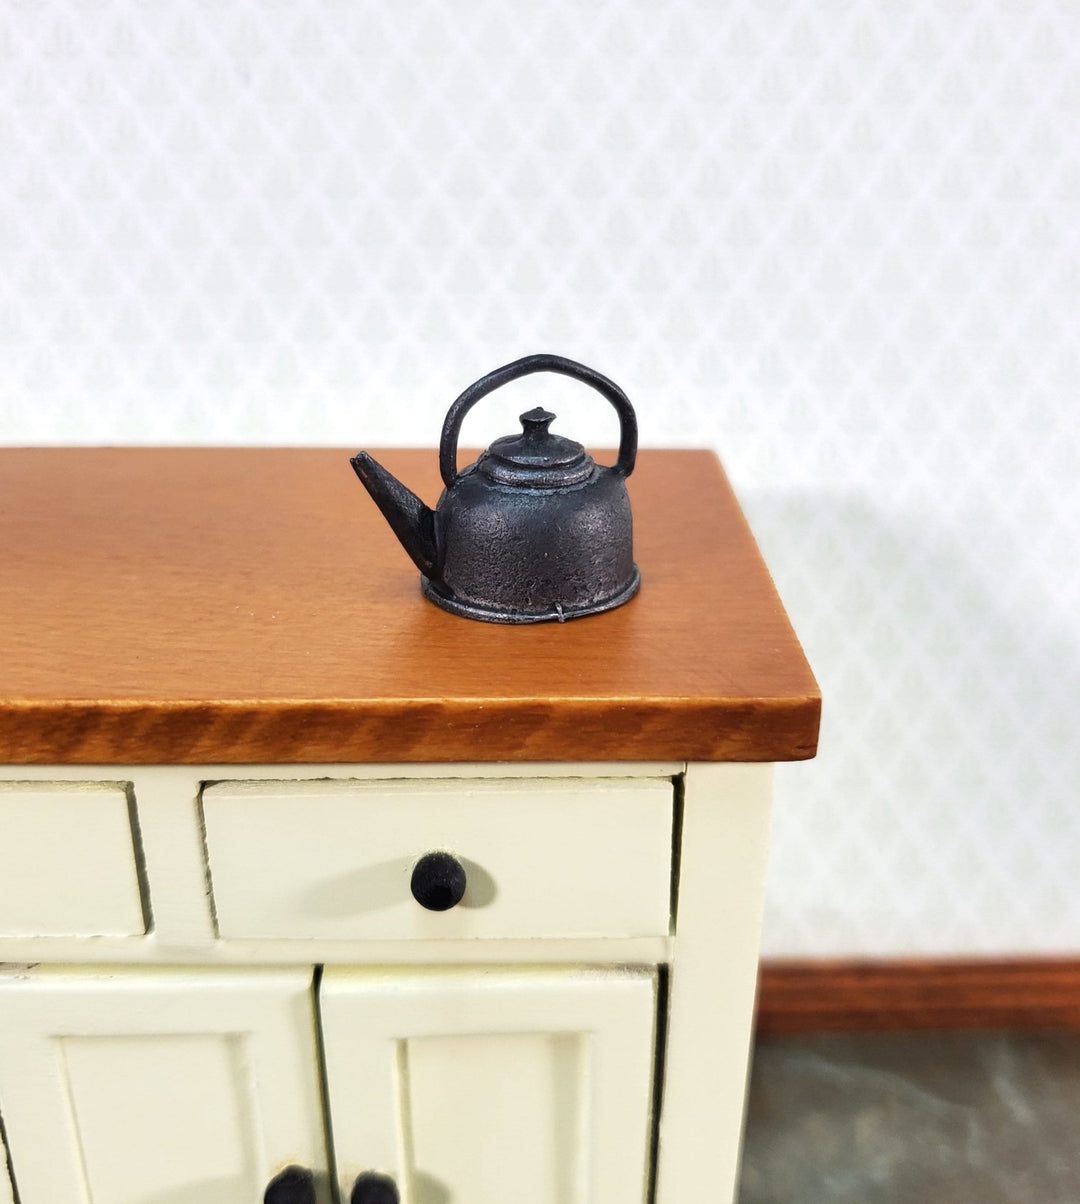 Dollhouse Coffee Pot Tea Kettle Painted Metal Cast Iron Look 1:12 Scale Miniature - Miniature Crush